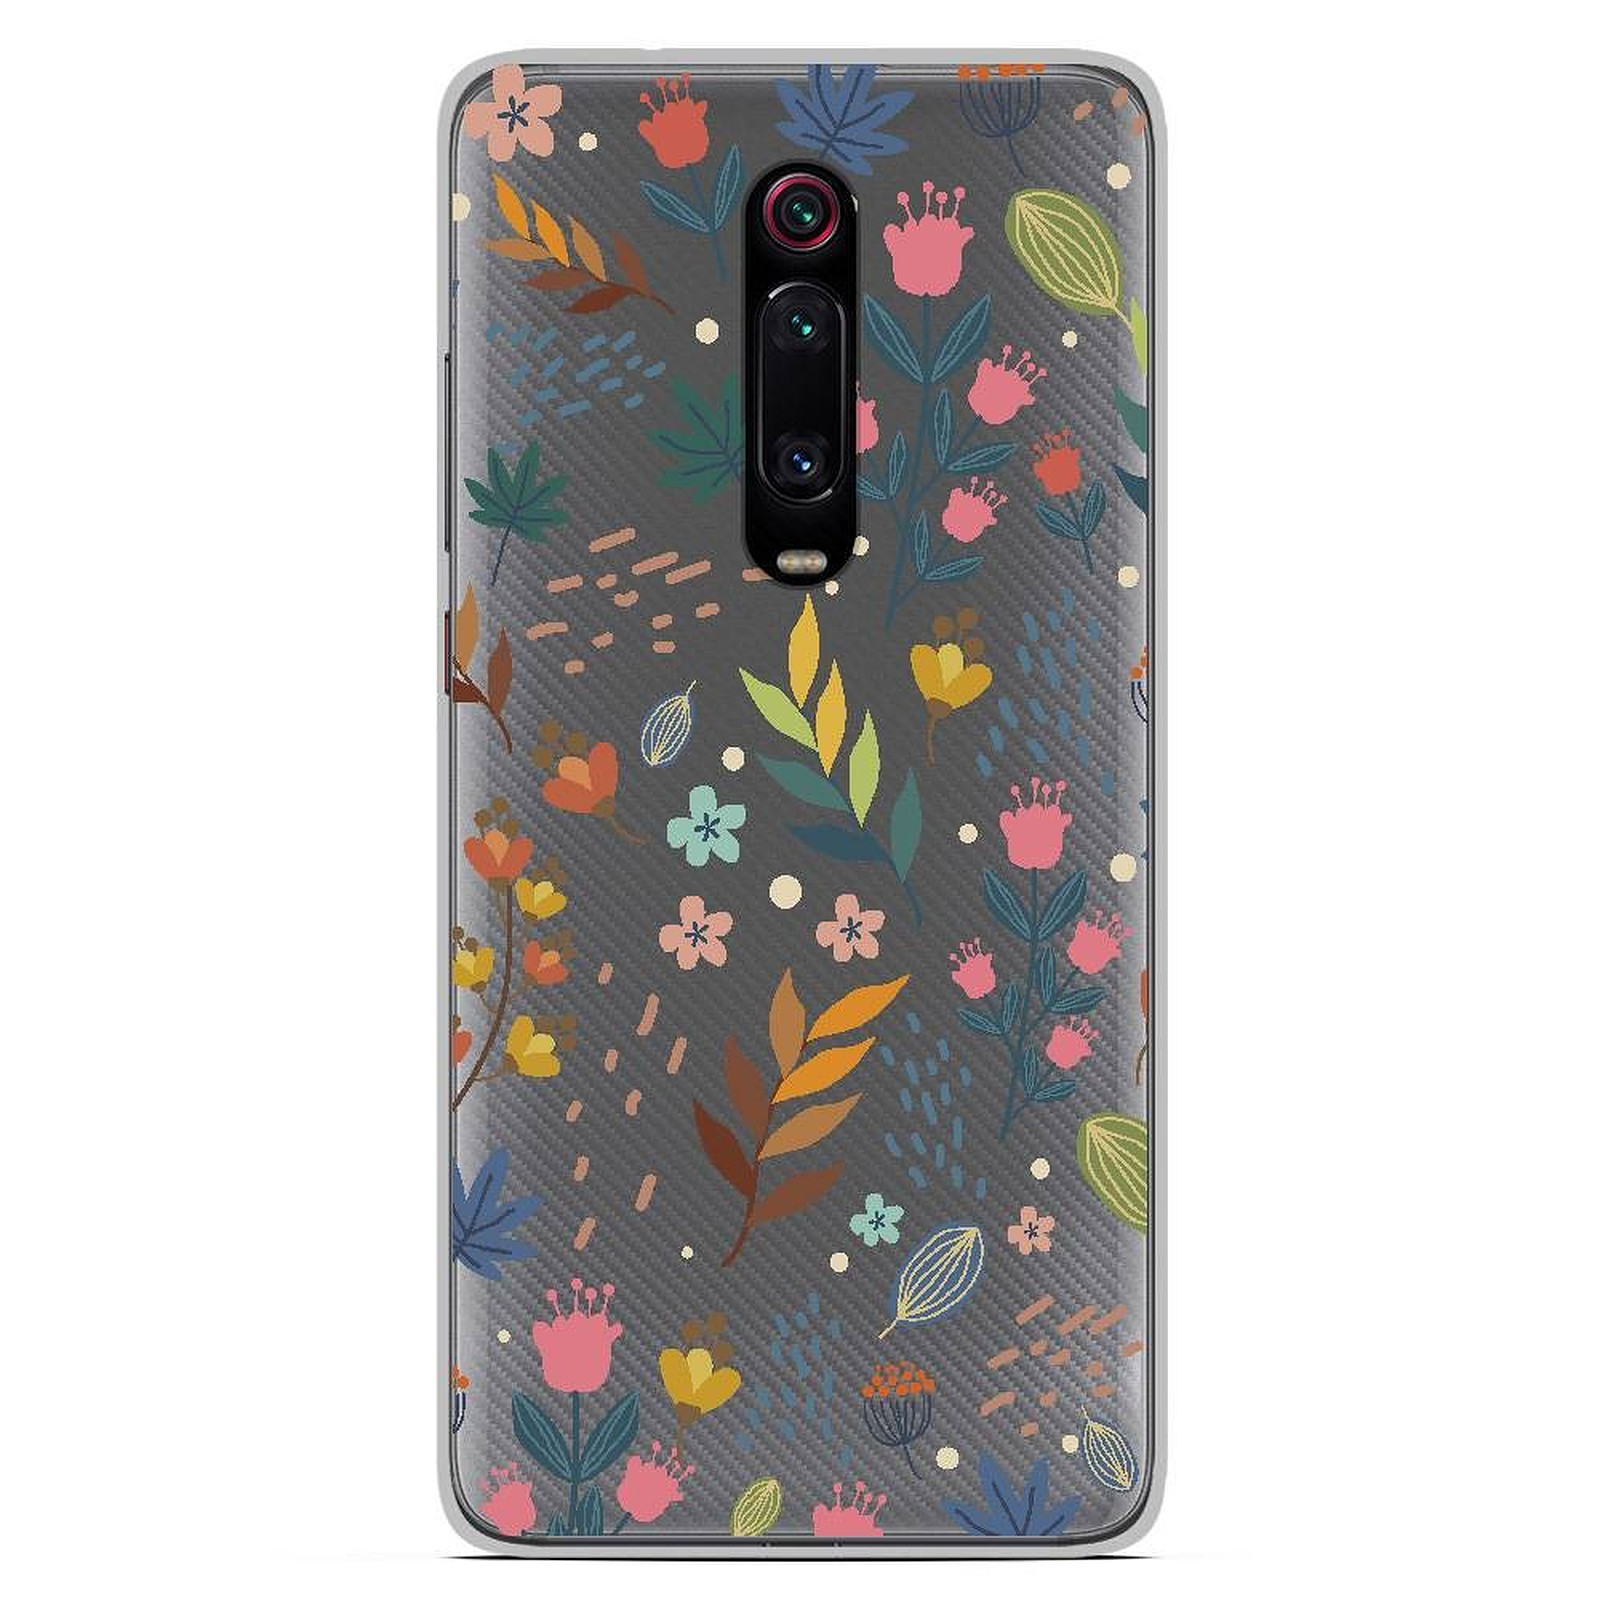 1001 Coques Coque silicone gel Xiaomi Mi 9T motif Fleurs colorees - Coque telephone 1001Coques